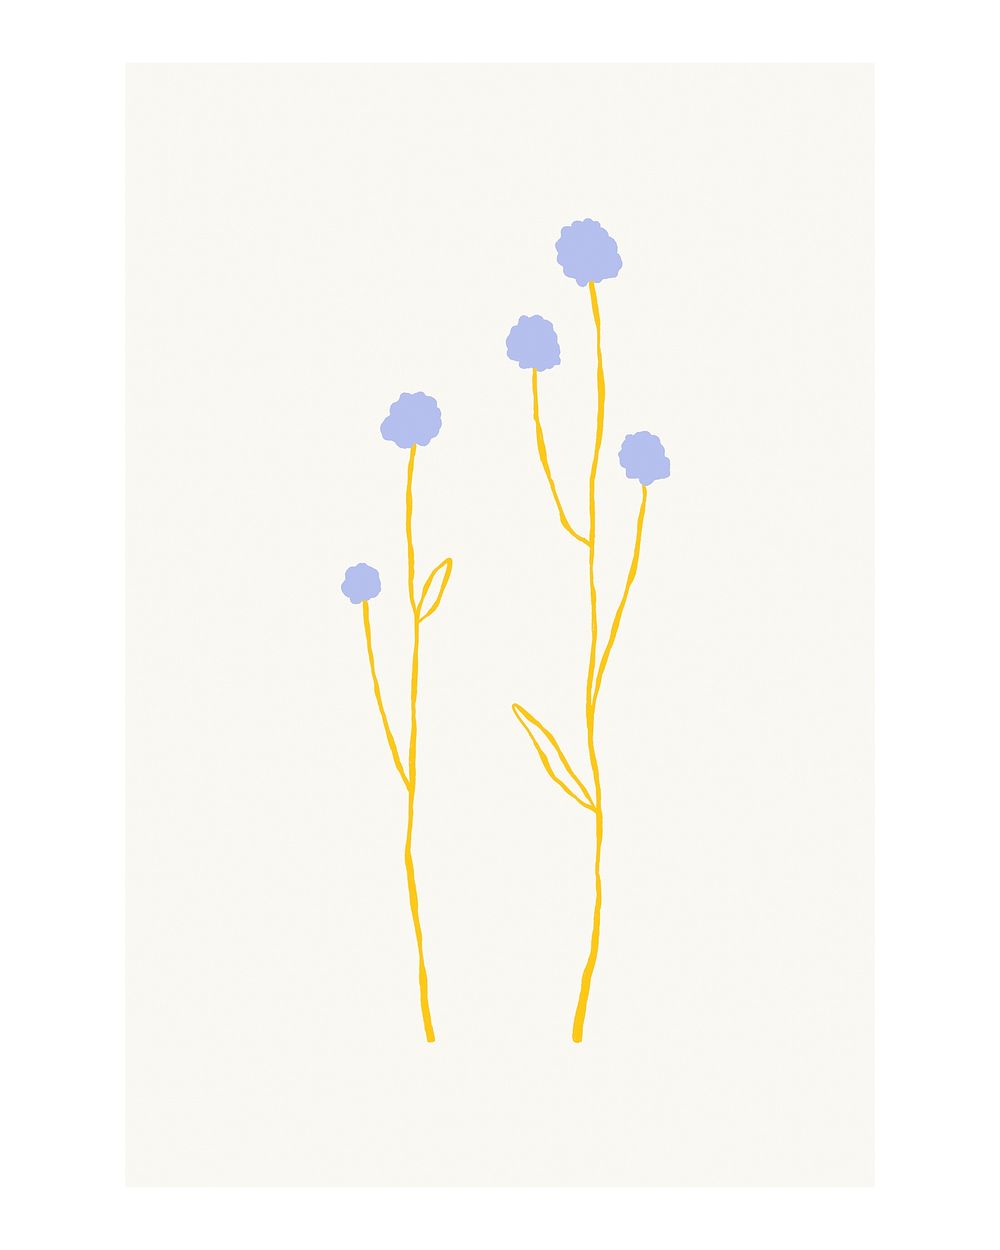 Flower doodle poster, minimal hand drawn illustration